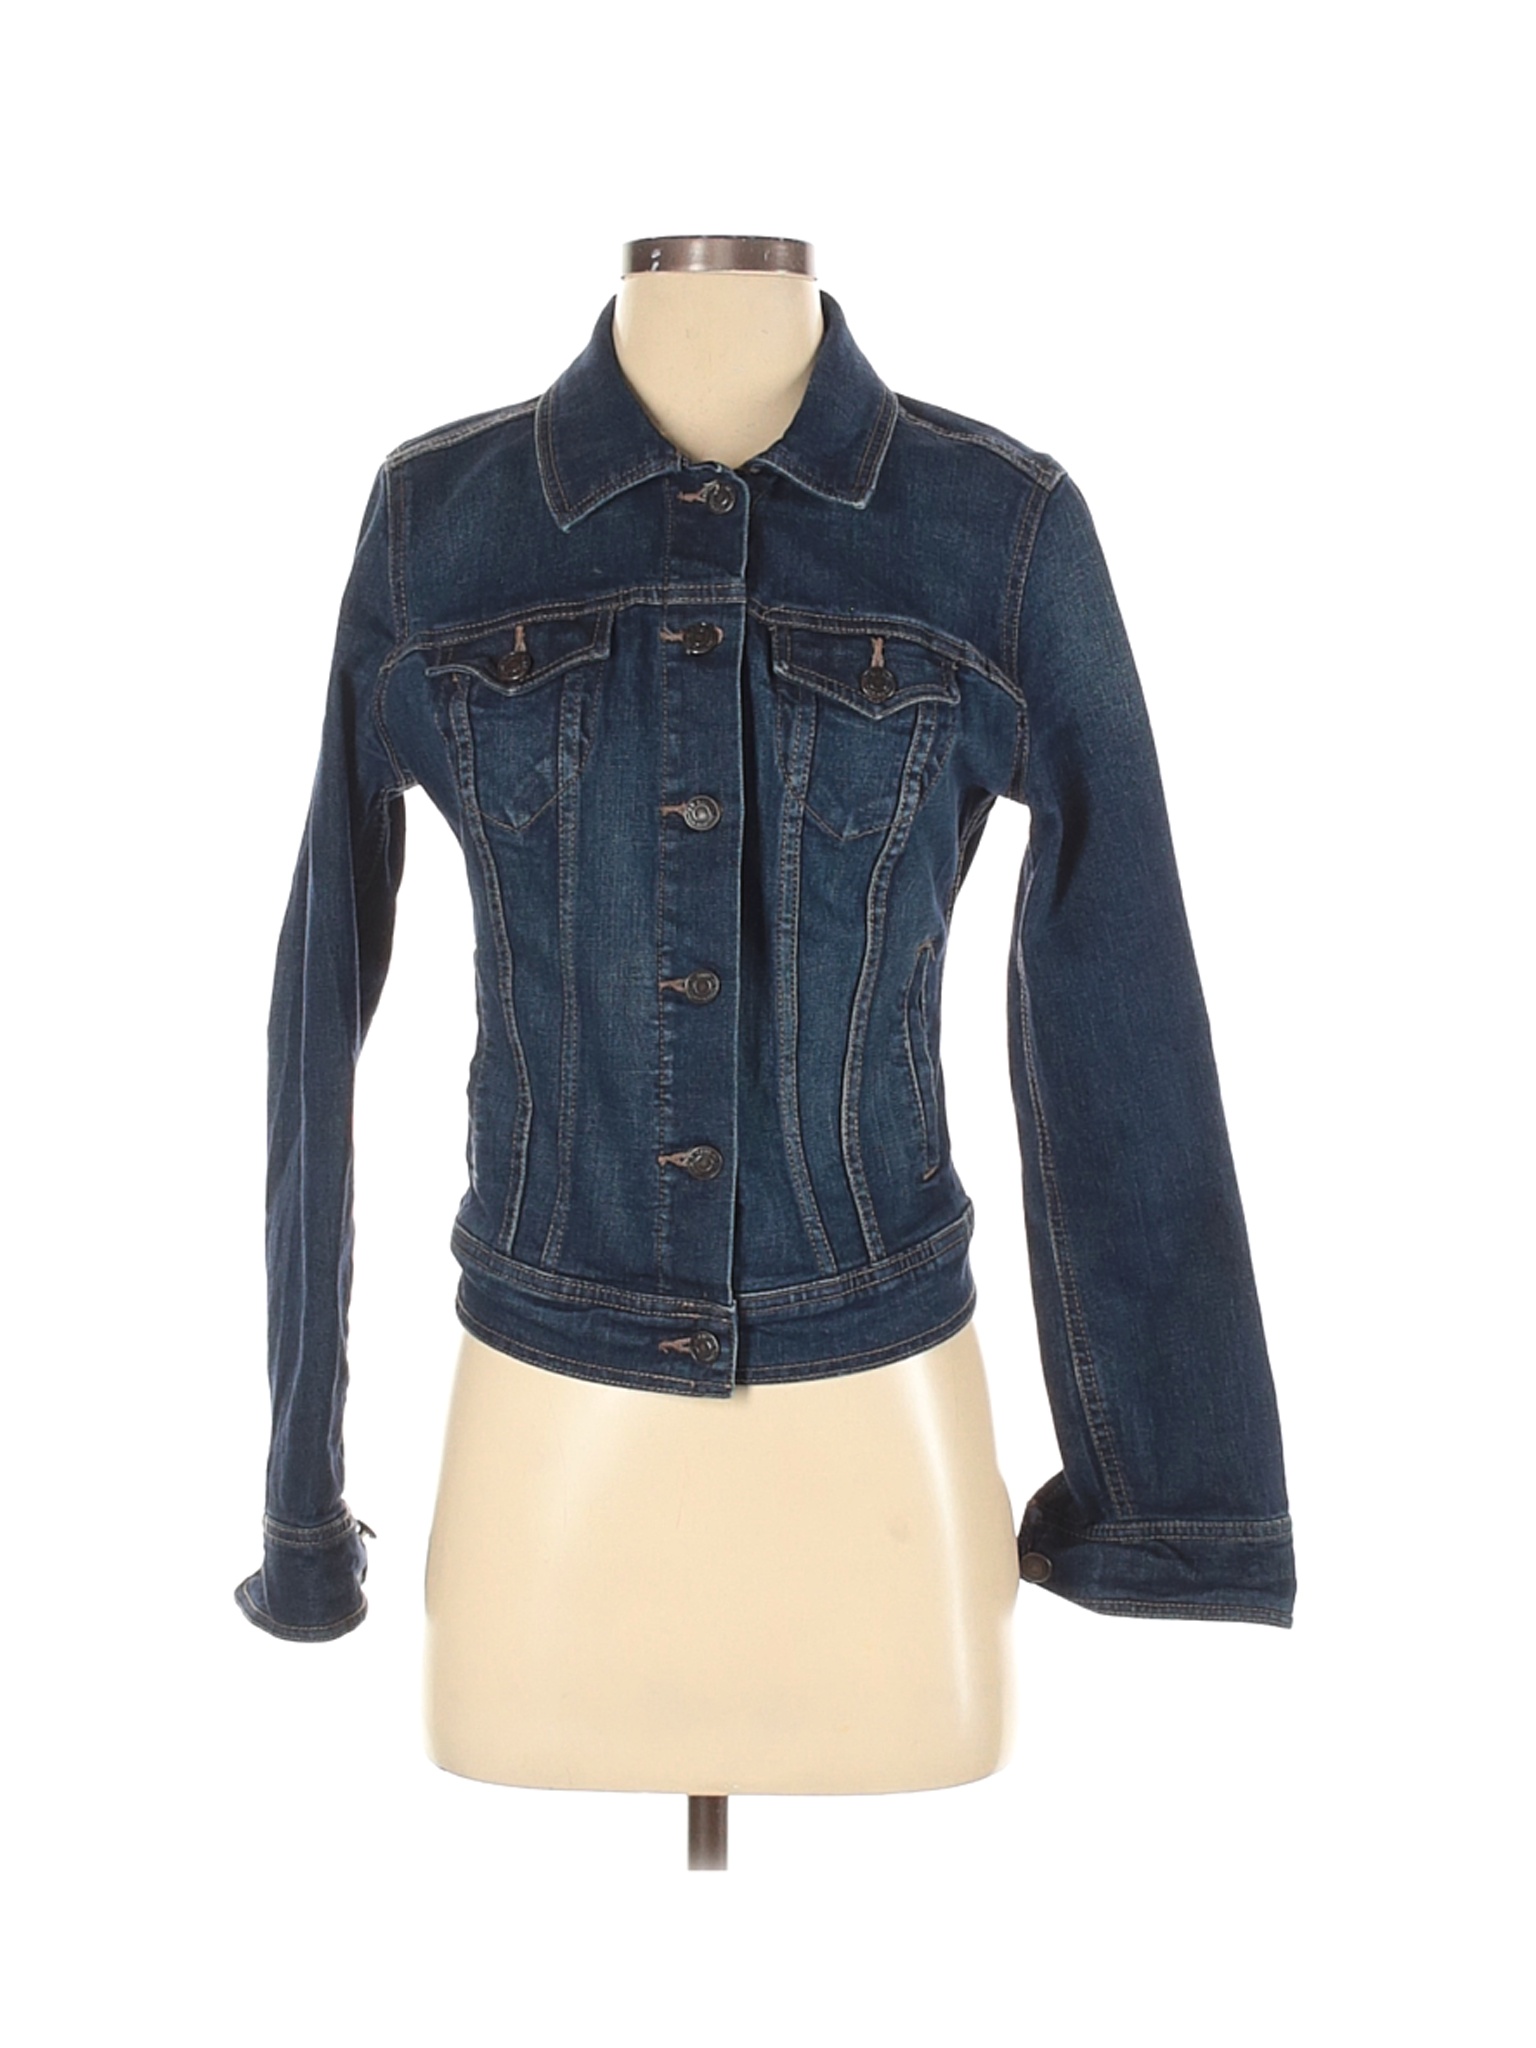 Old Navy Women Blue Denim Jacket S | eBay